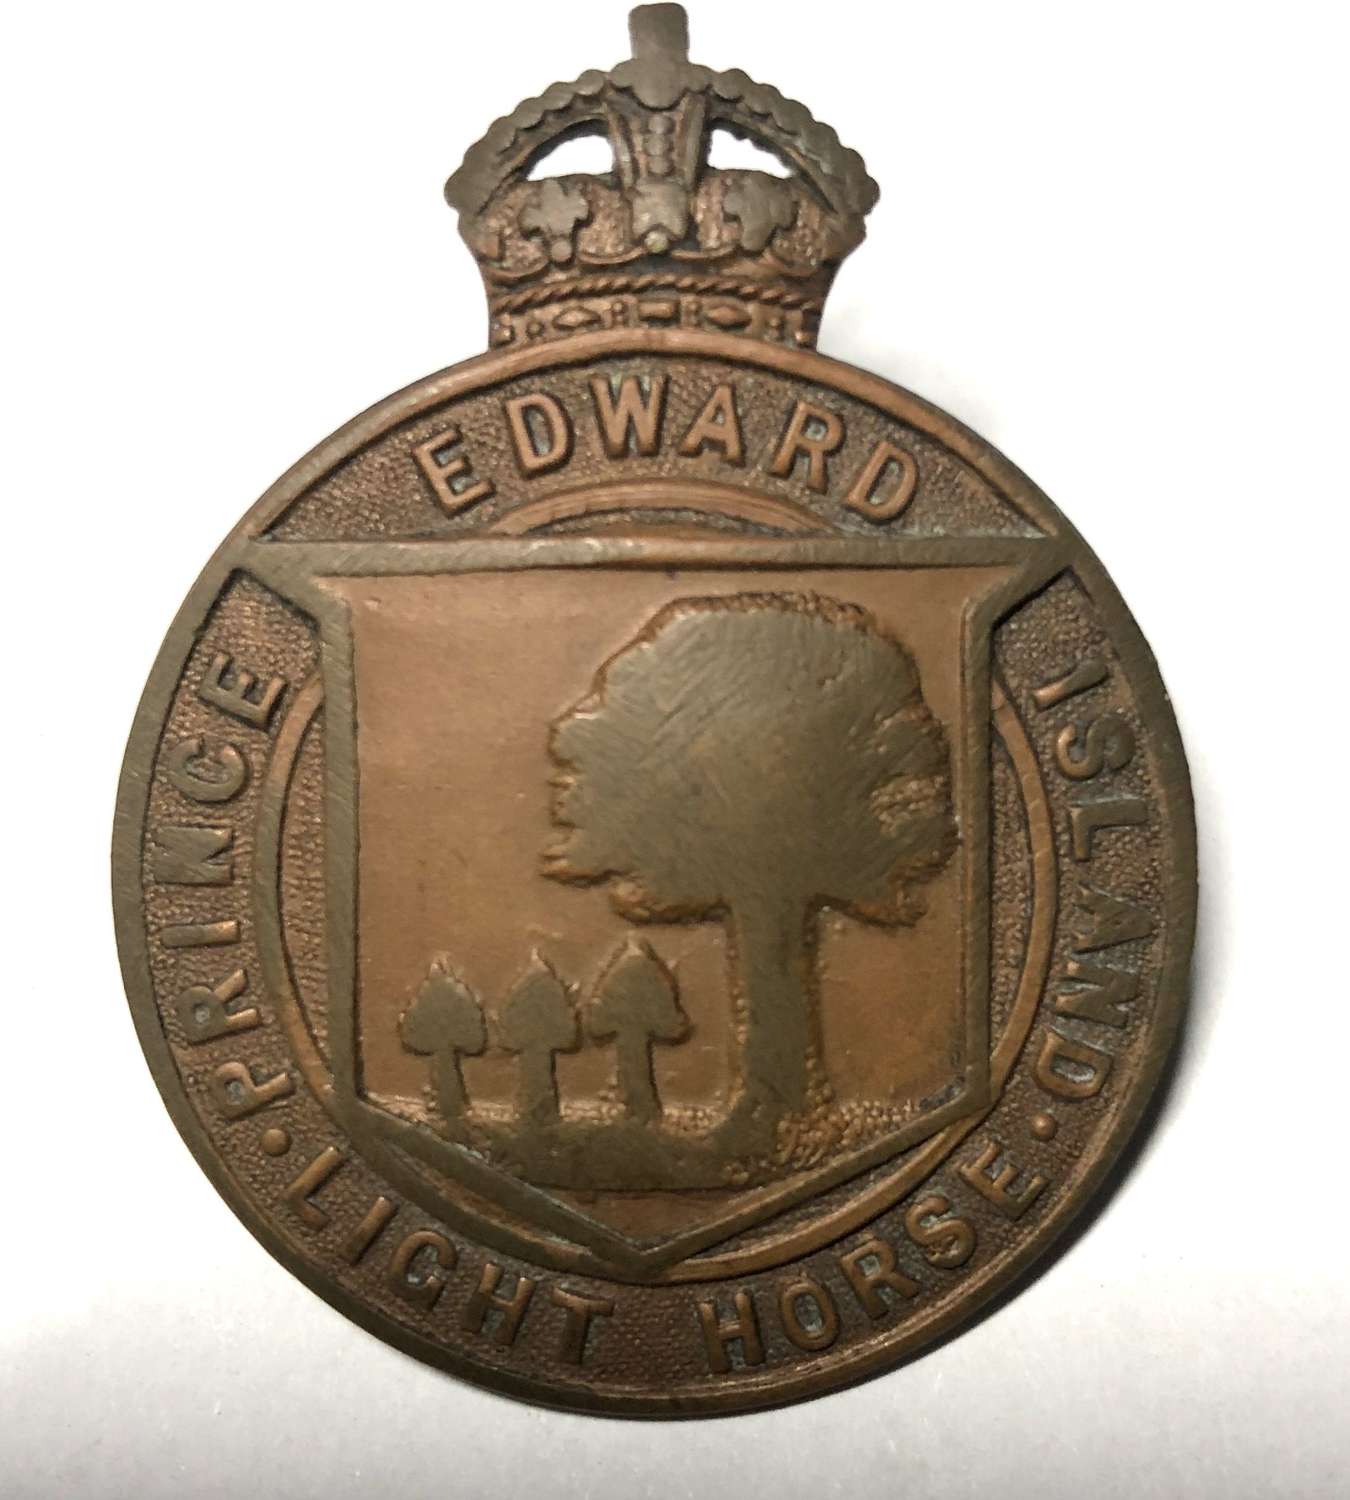 Canadian Prince Edward Island Light Horse cap badge by Birks